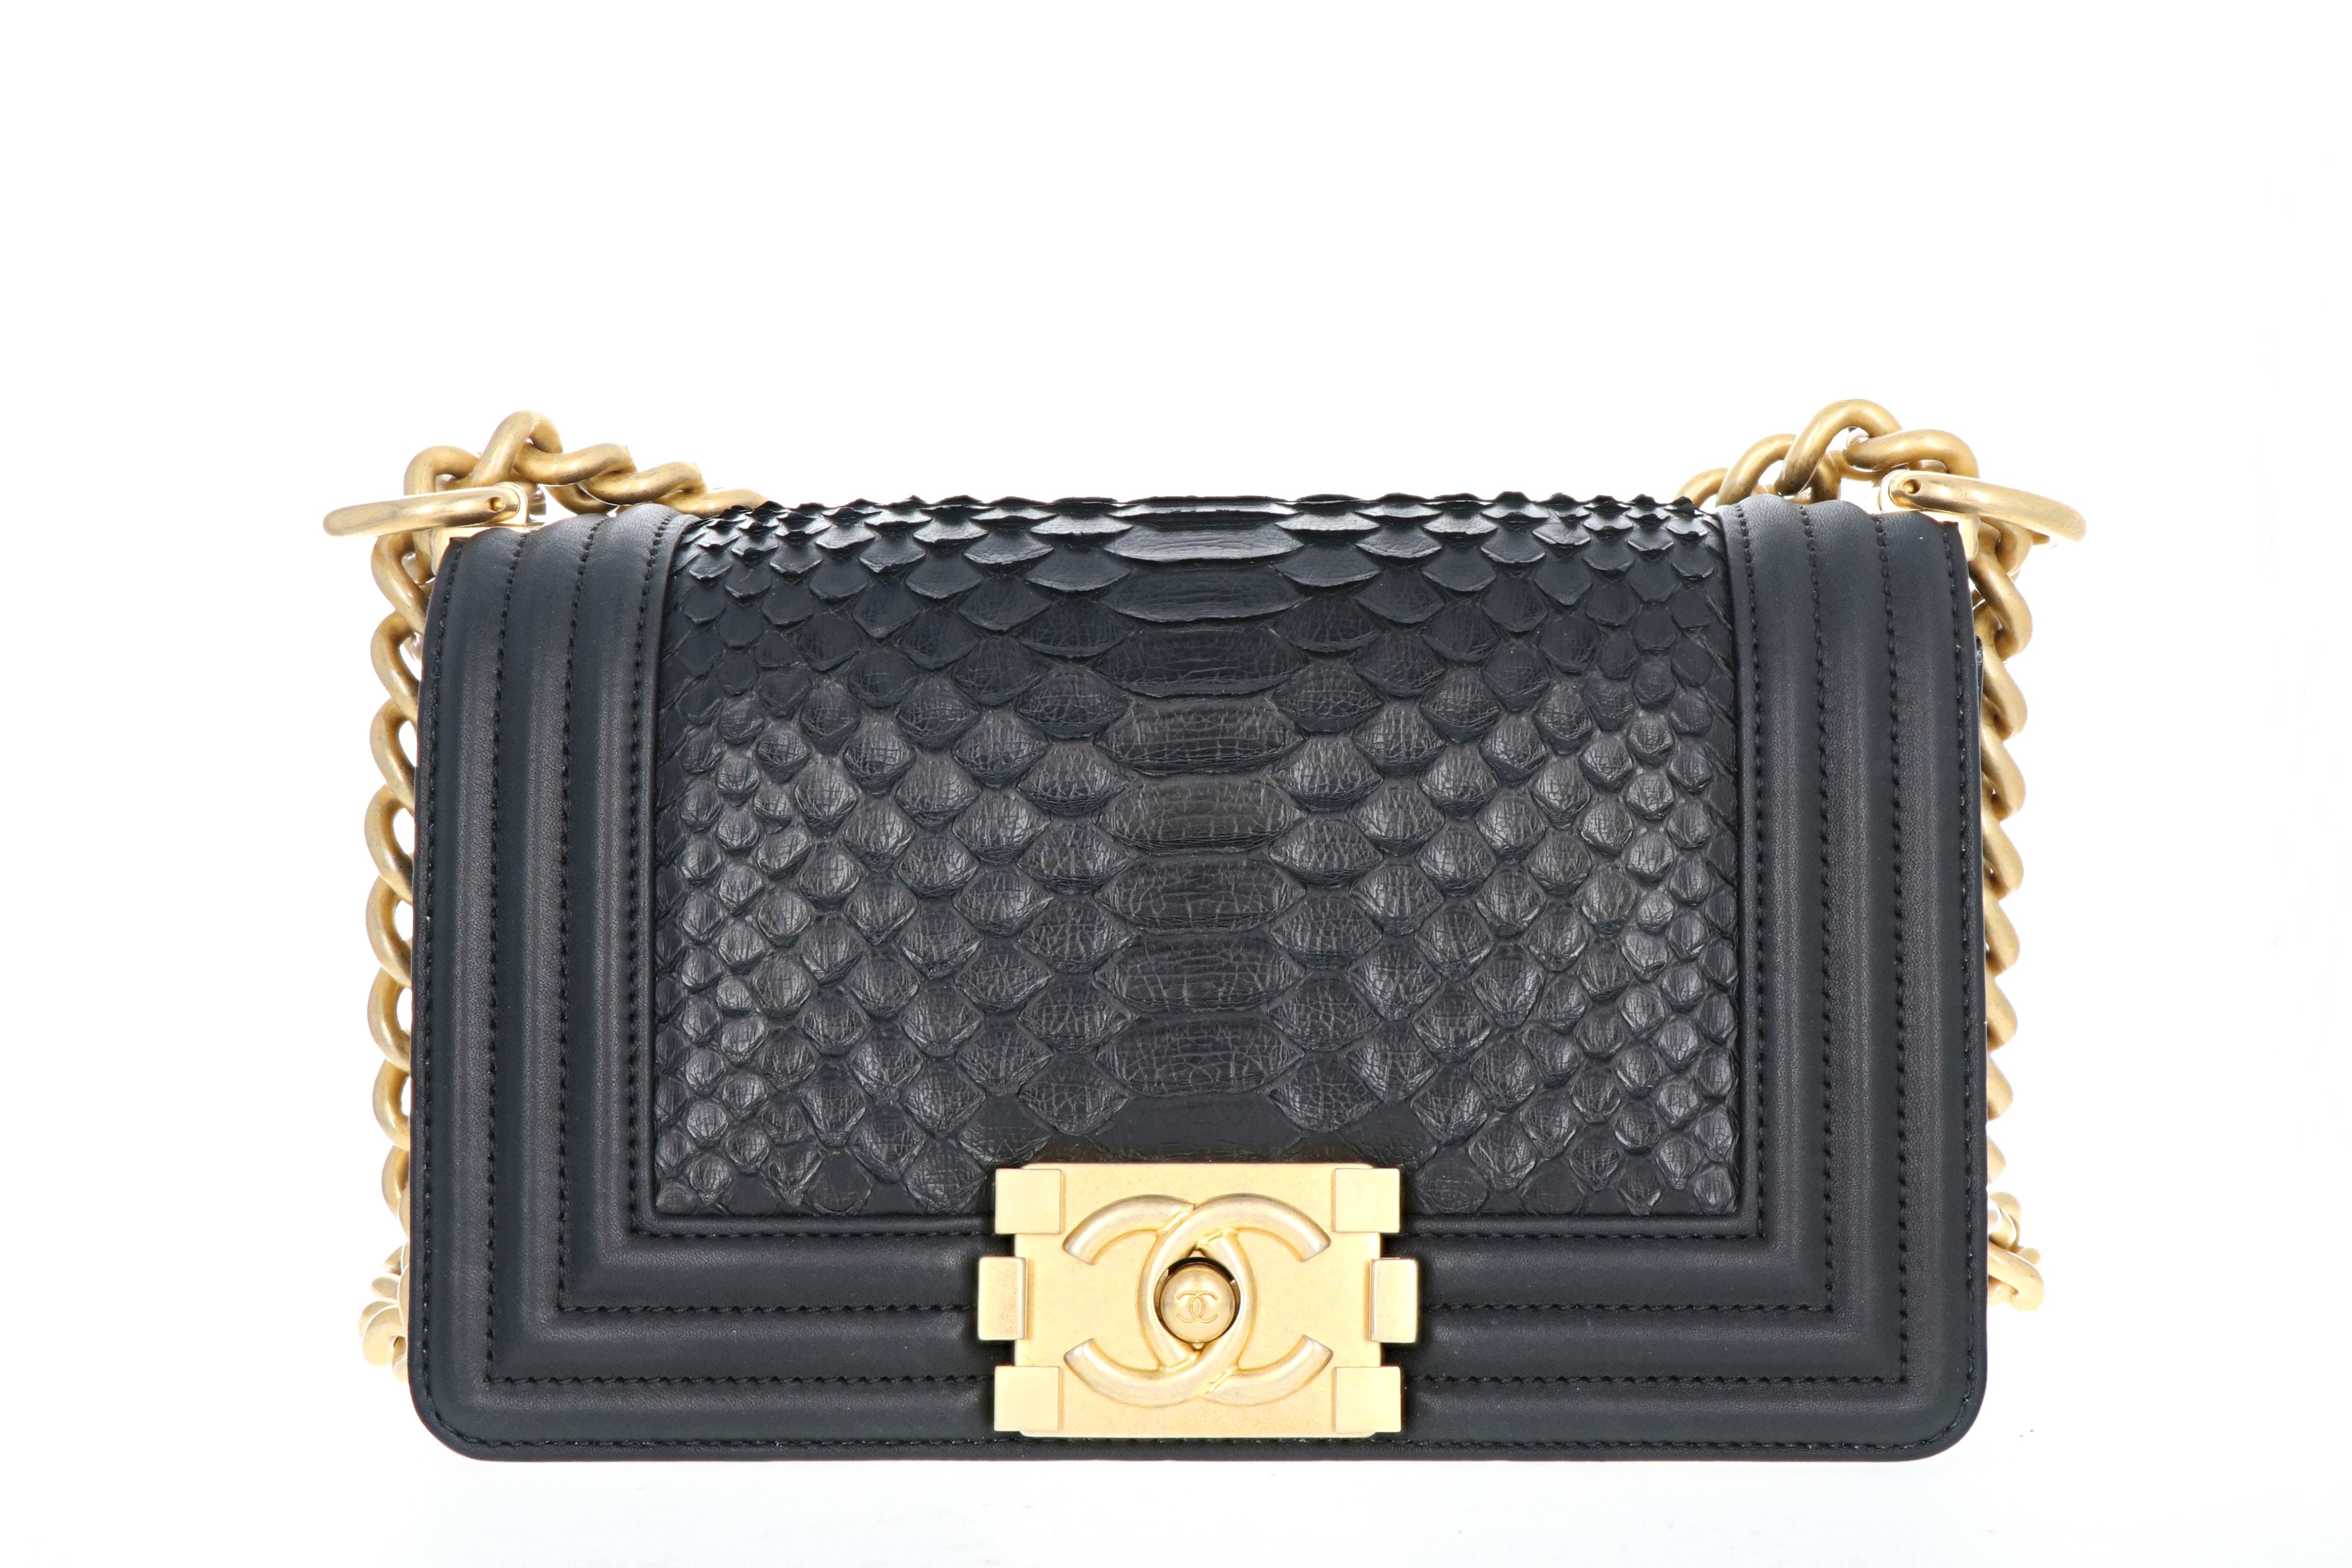 Chanel Exotics Small Boy Bag Black Python Molurus Leather